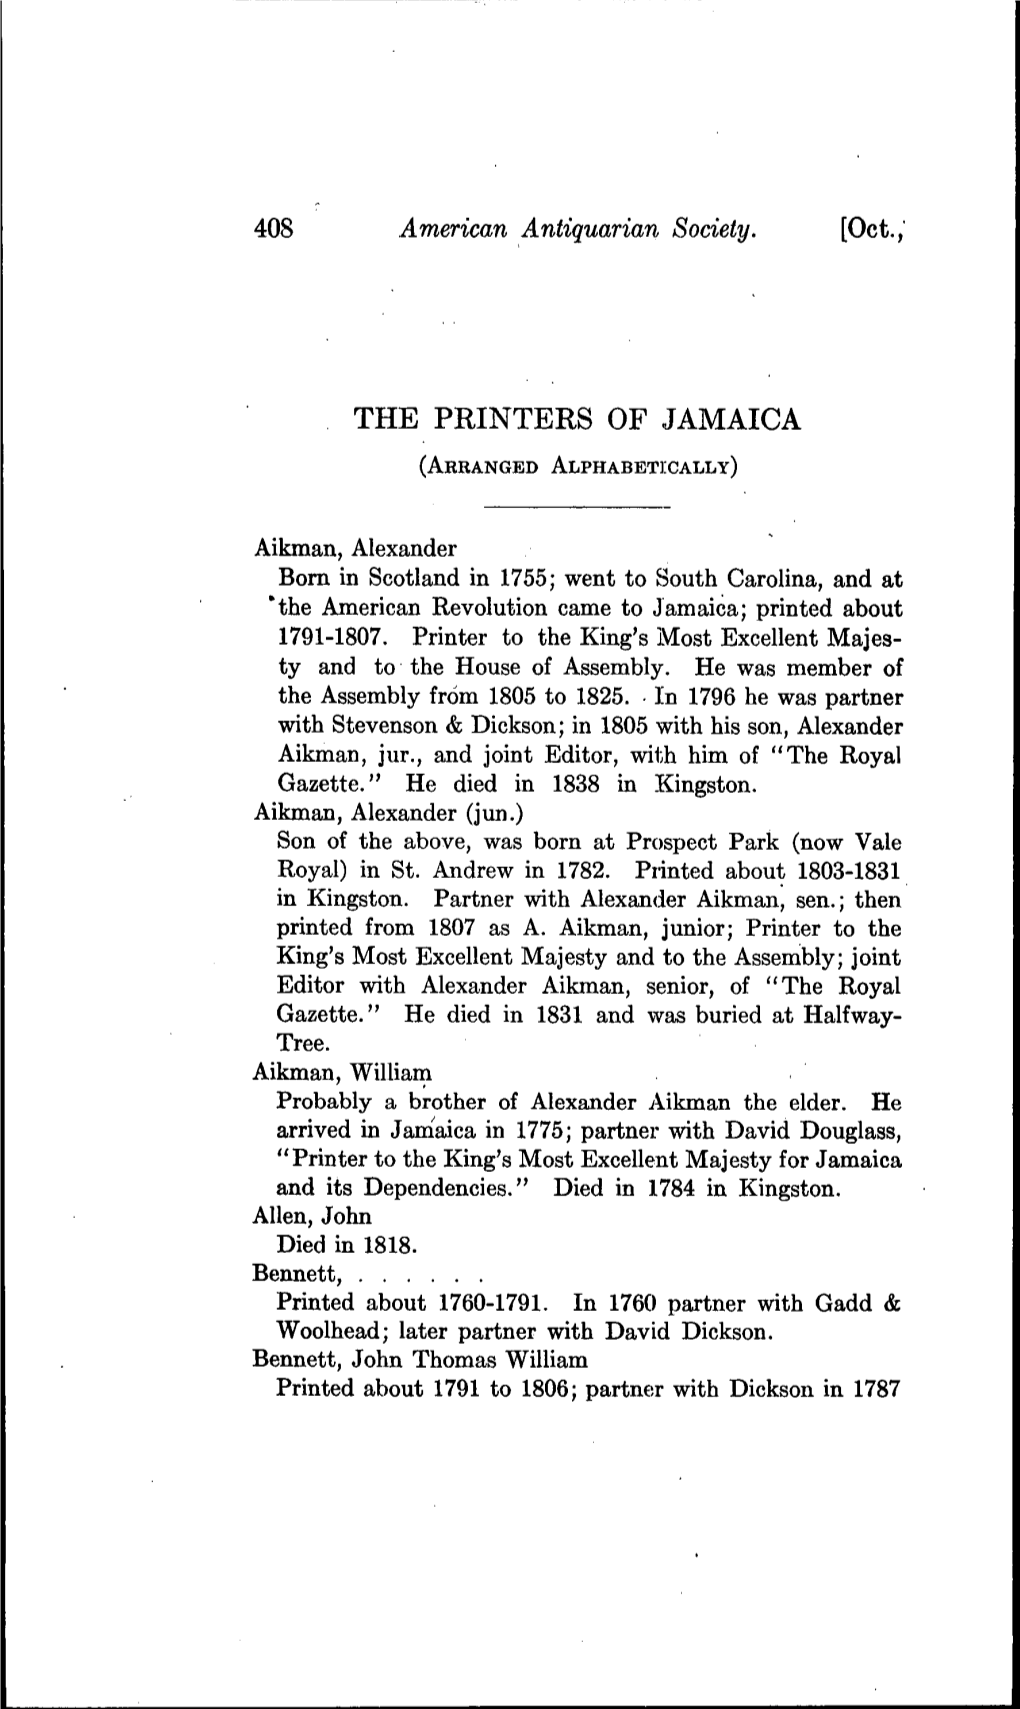 The Printers of Jamaica (Arbanged Alphabetically)